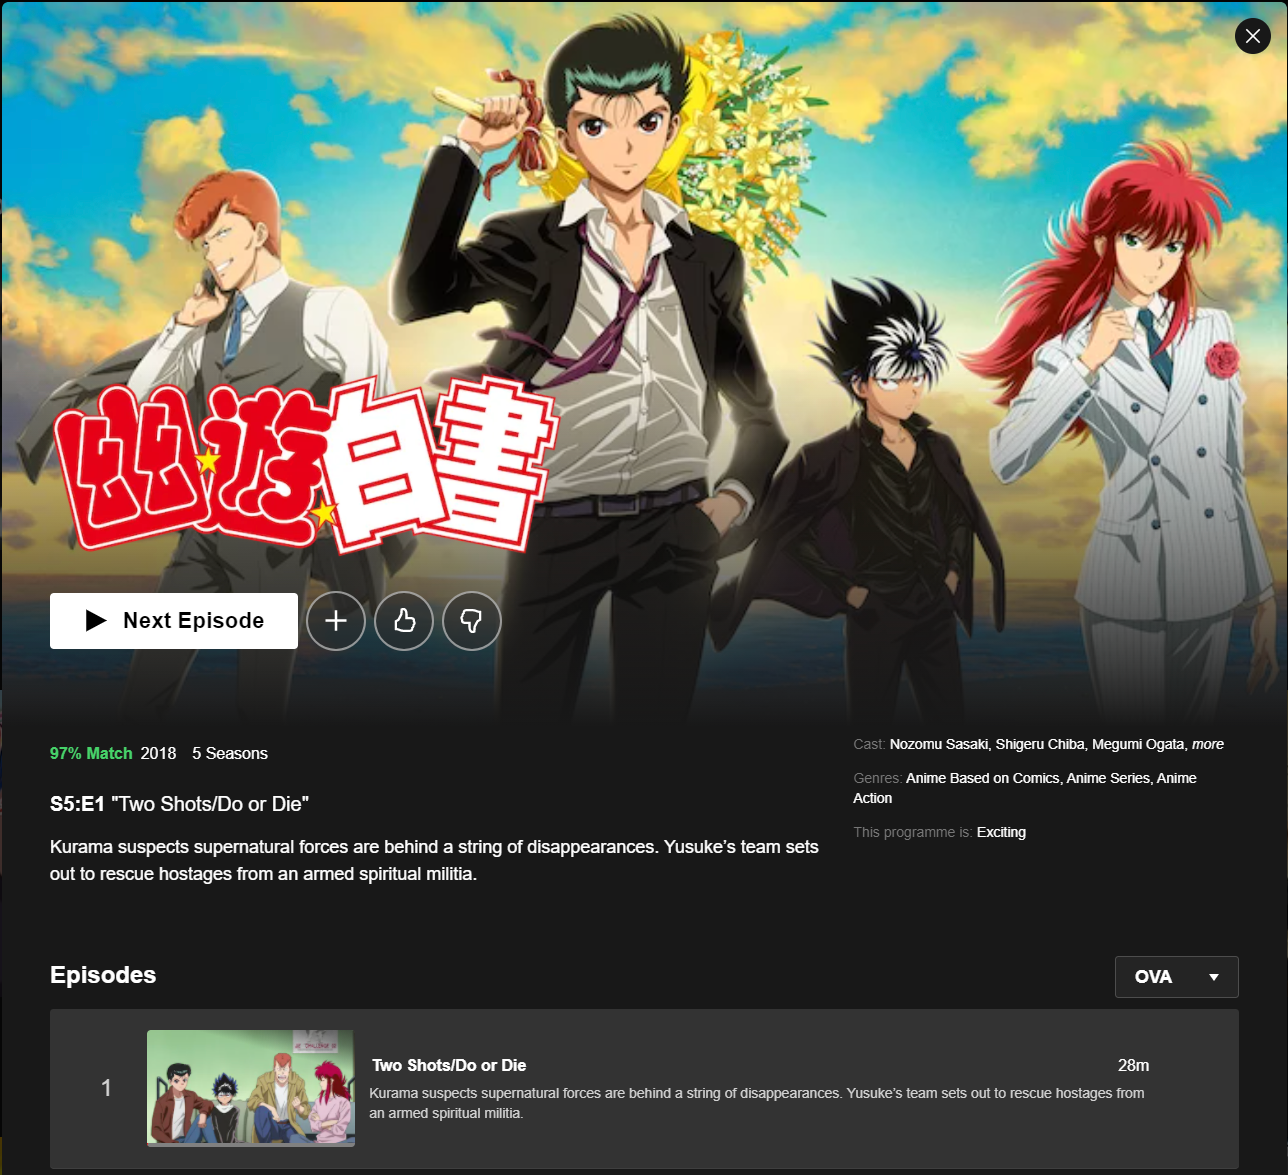 New Yu Yu Hakusho Series Announced By Netflix The Unofficial Home Of Yu Yu Hakusho